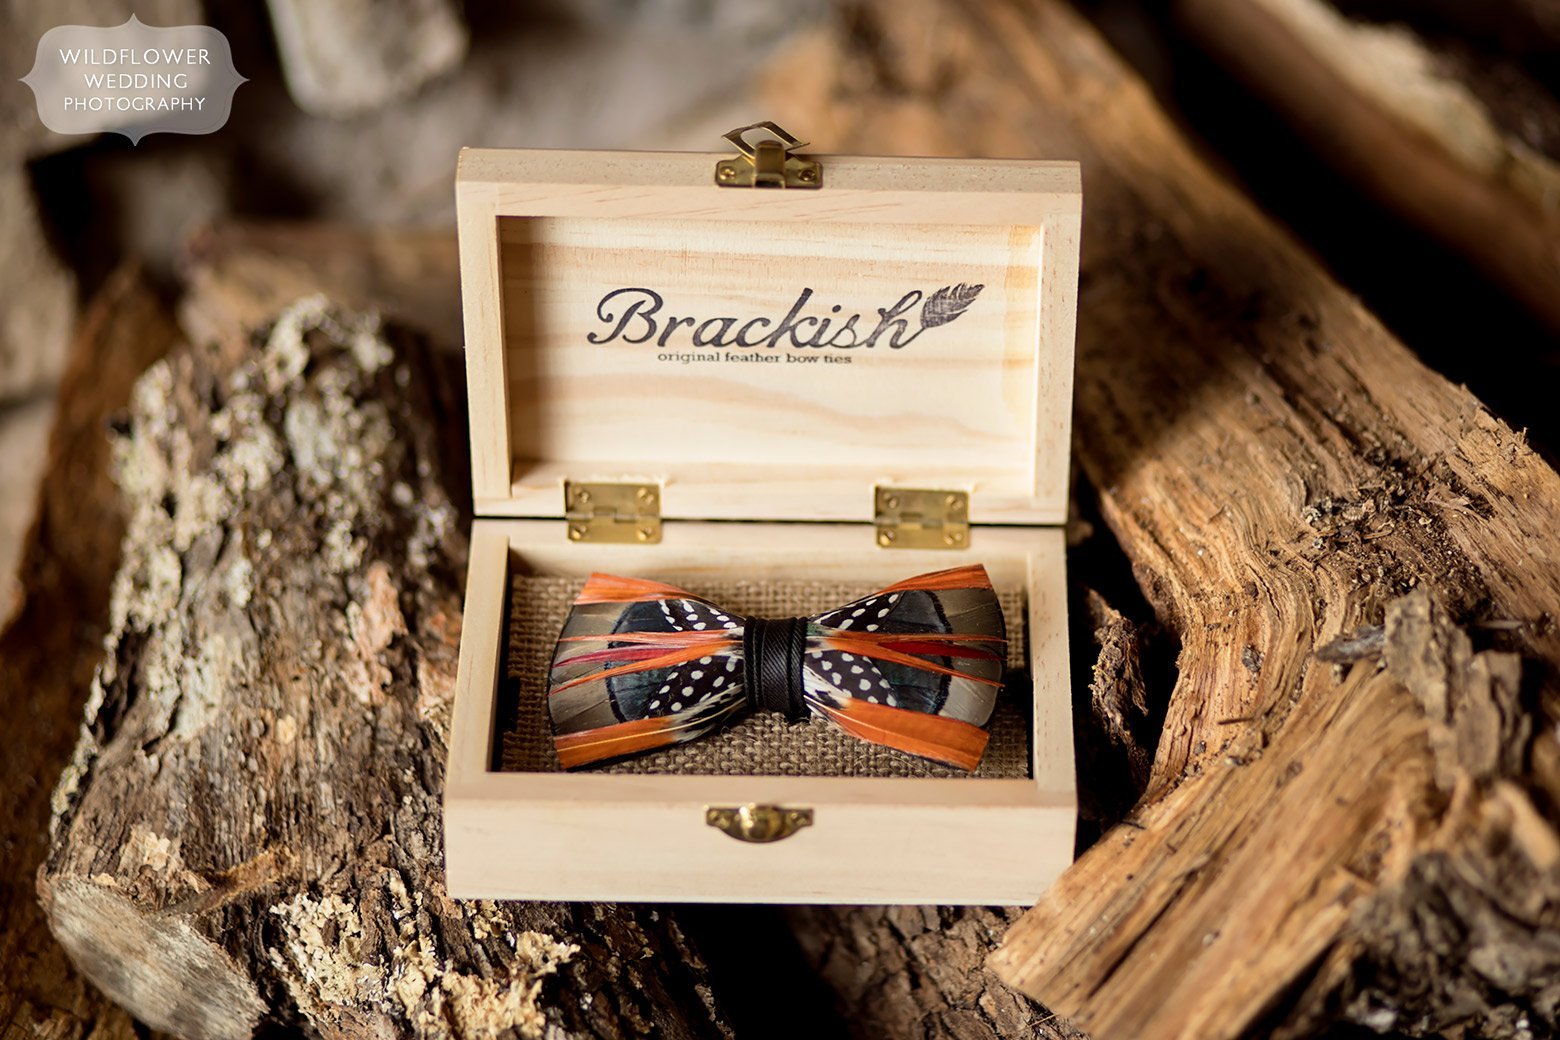 Brackish feather bow tie for wedding.